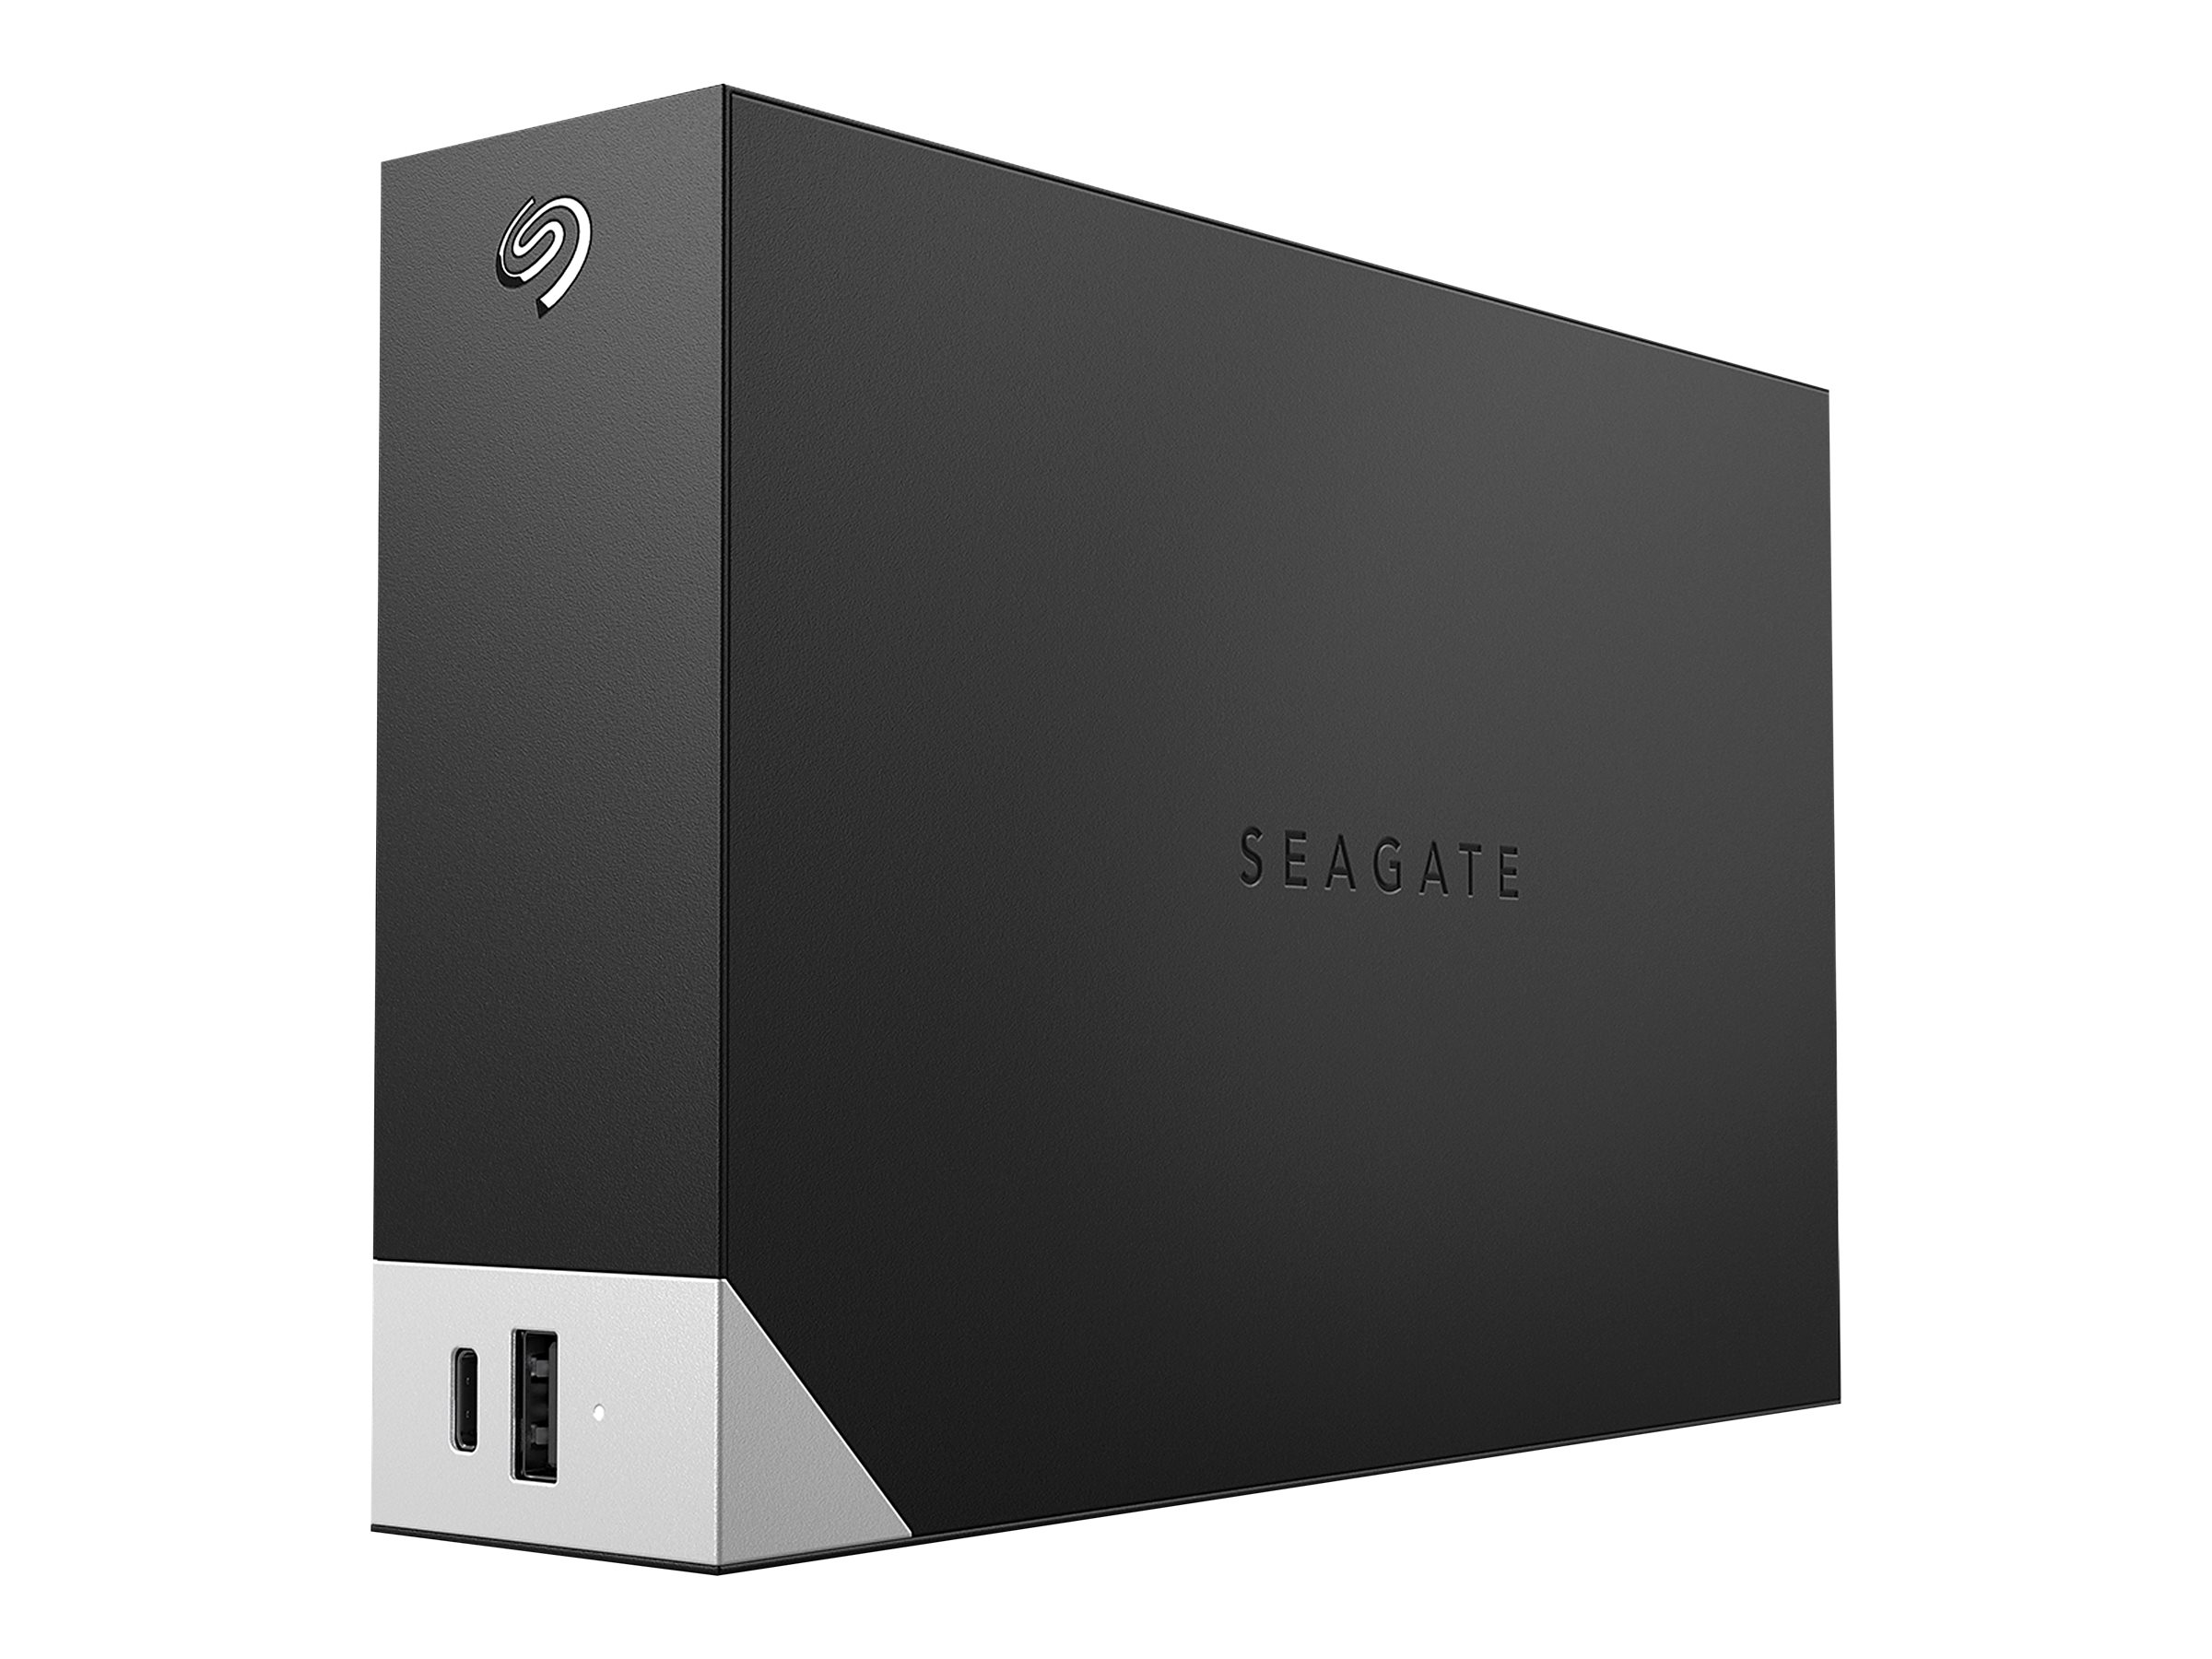 Seagate One Touch with hub STLC6000400 - Festplatte - 6 TB - extern (Stationär) - USB 3.0 - Schwarz